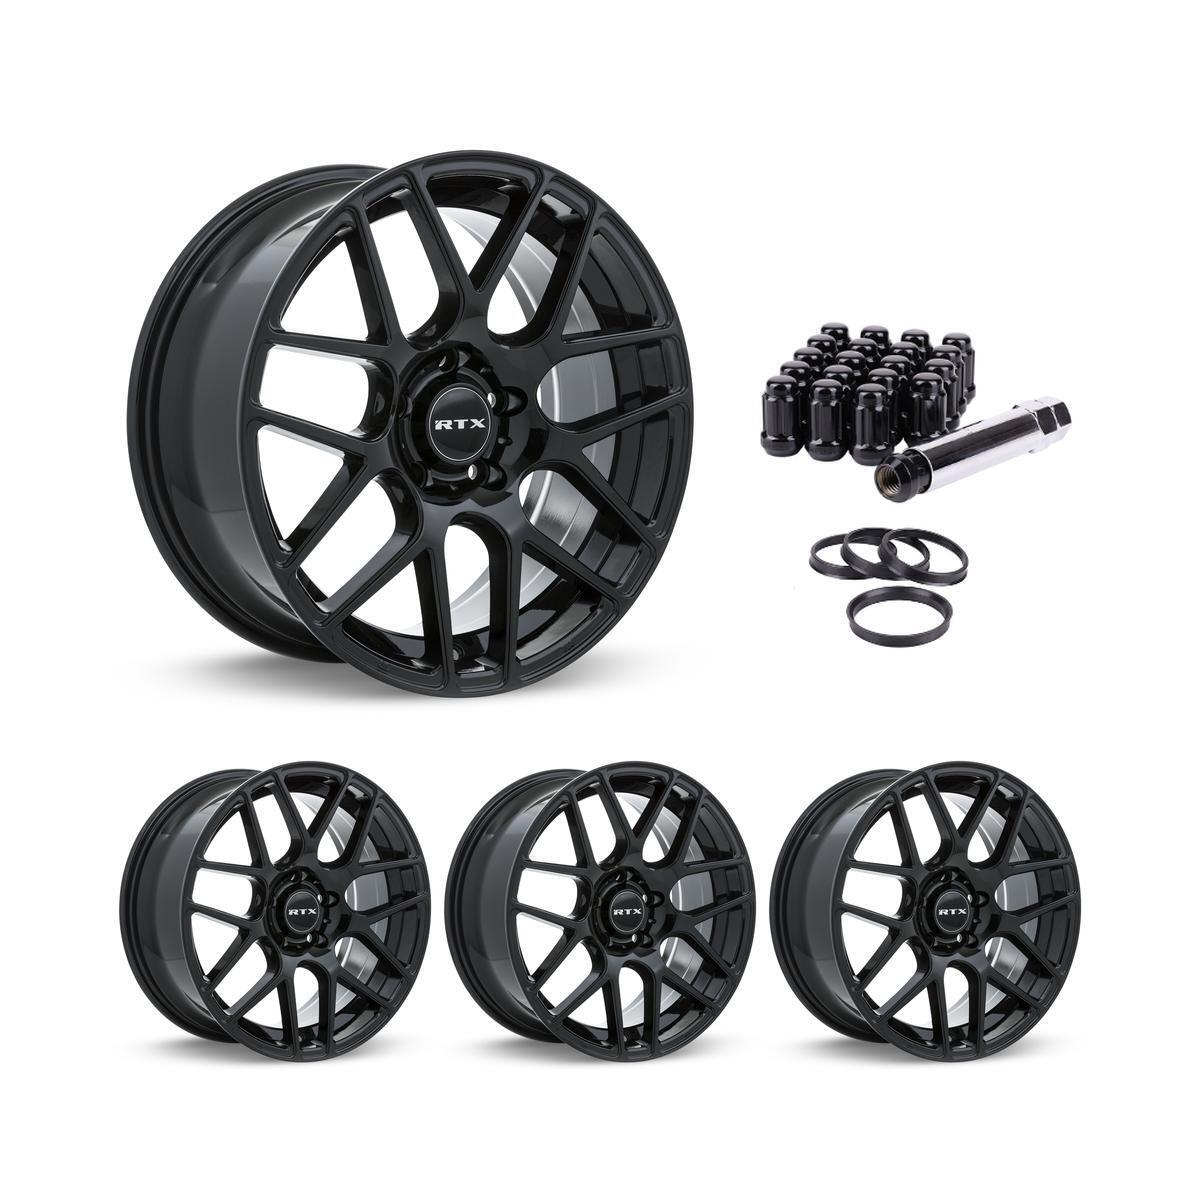 Wheel Rims Set with Black Lug Nuts Kit for 95-05 Pontiac Sunfire P884103 16 inch